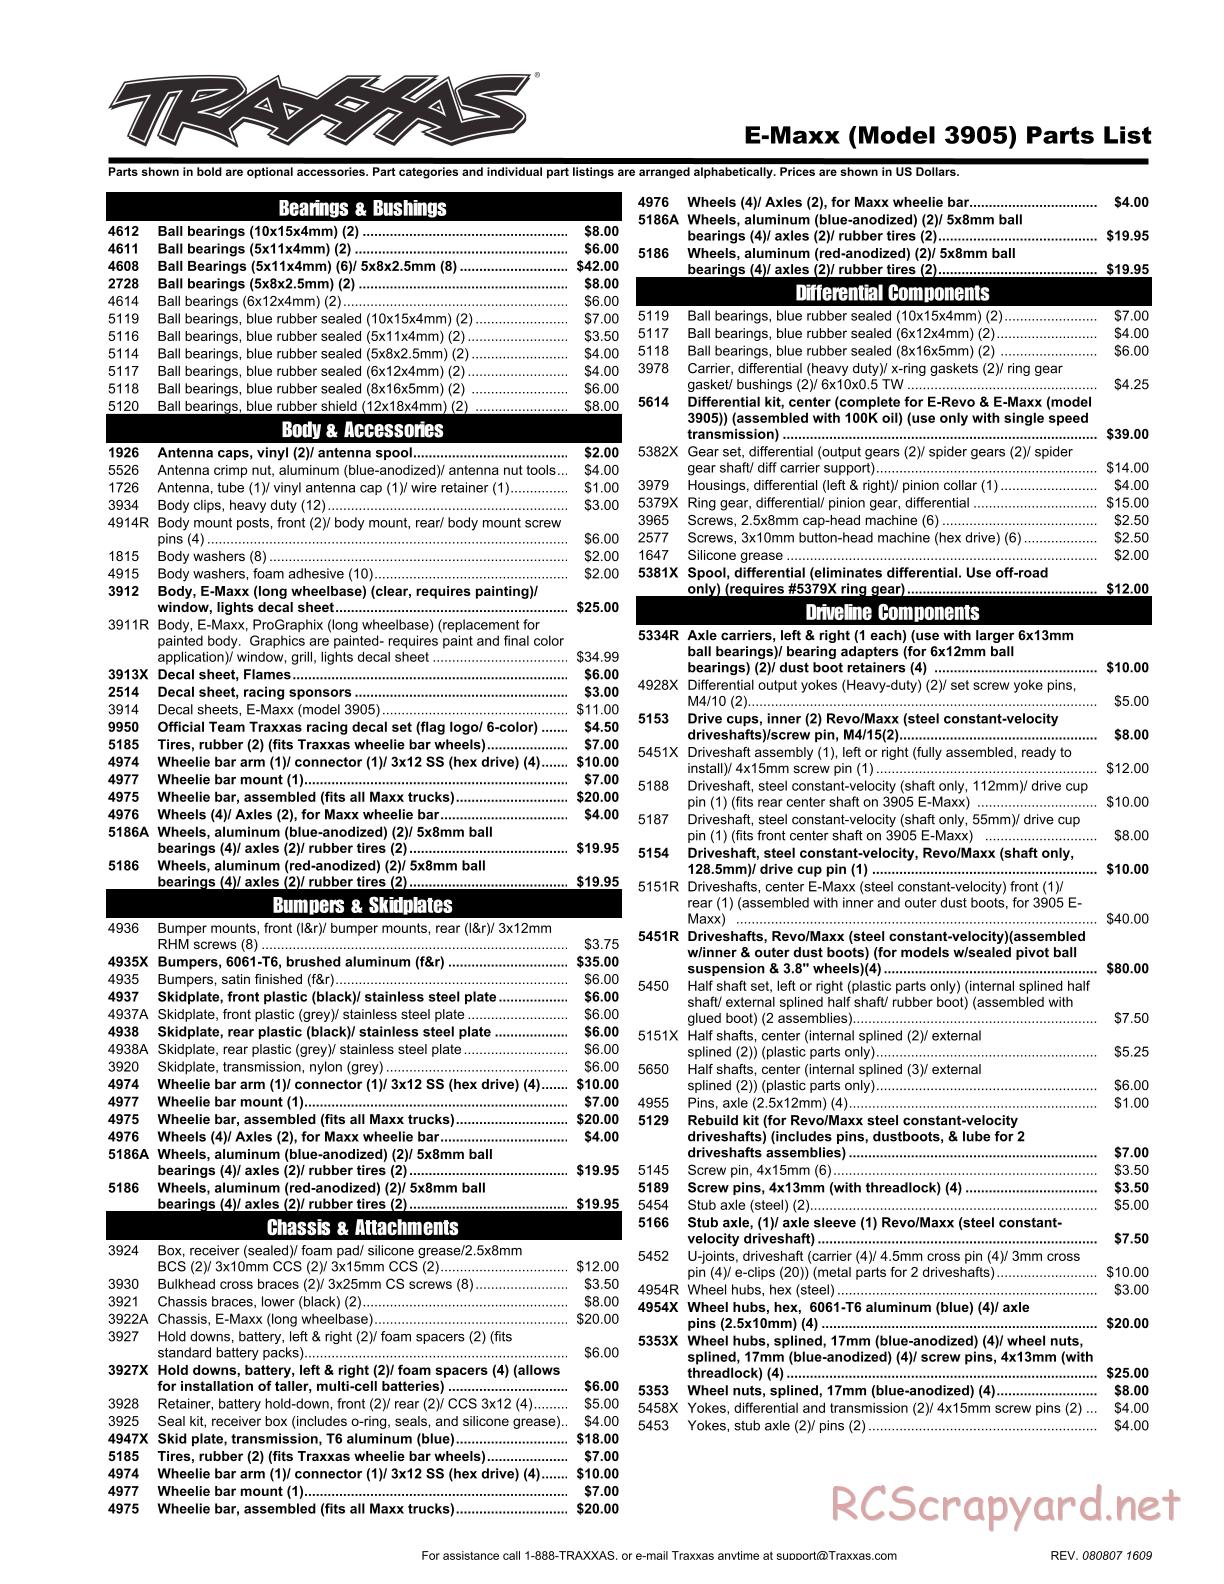 Traxxas - E-Maxx (2007) - Parts List - Page 1